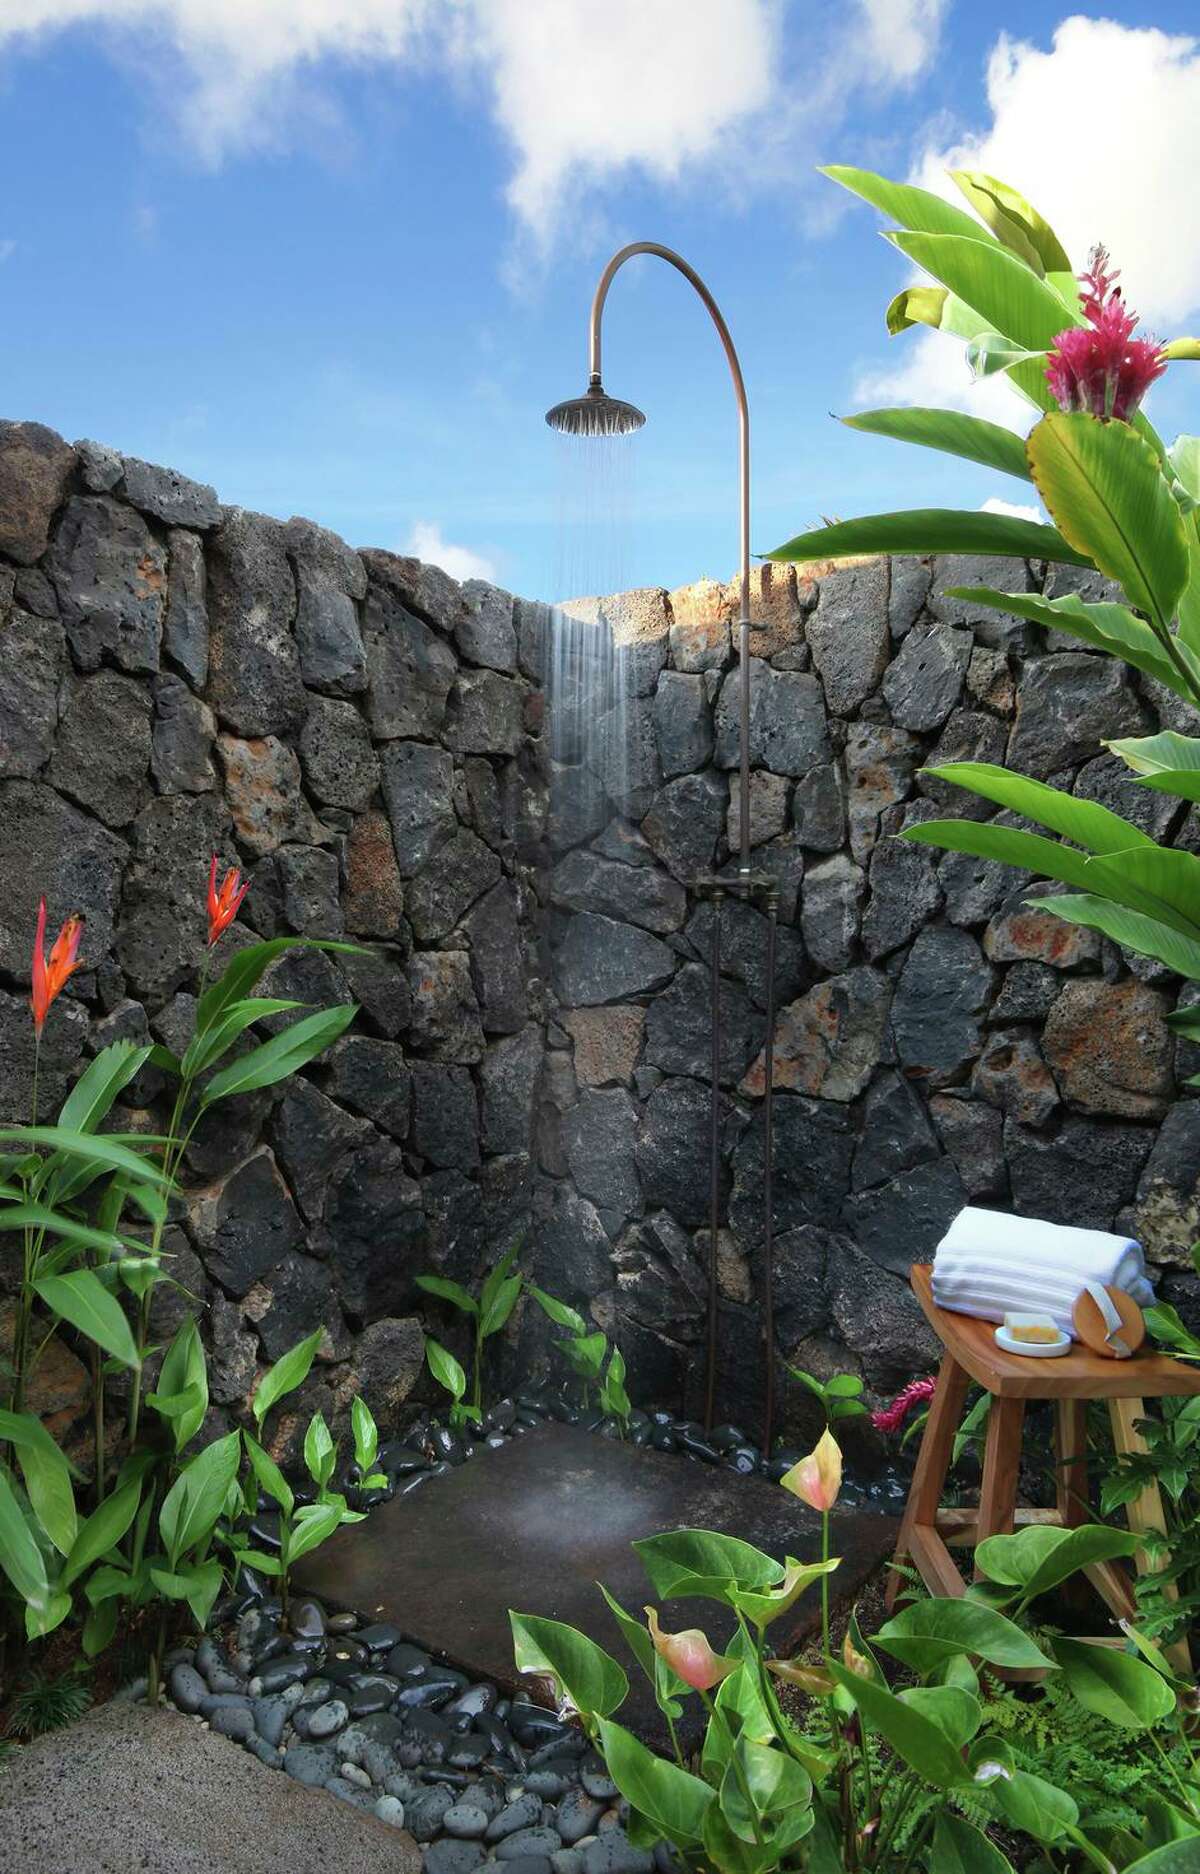 Island residence at Kaua’i offers a uniquely Hawaiian experience